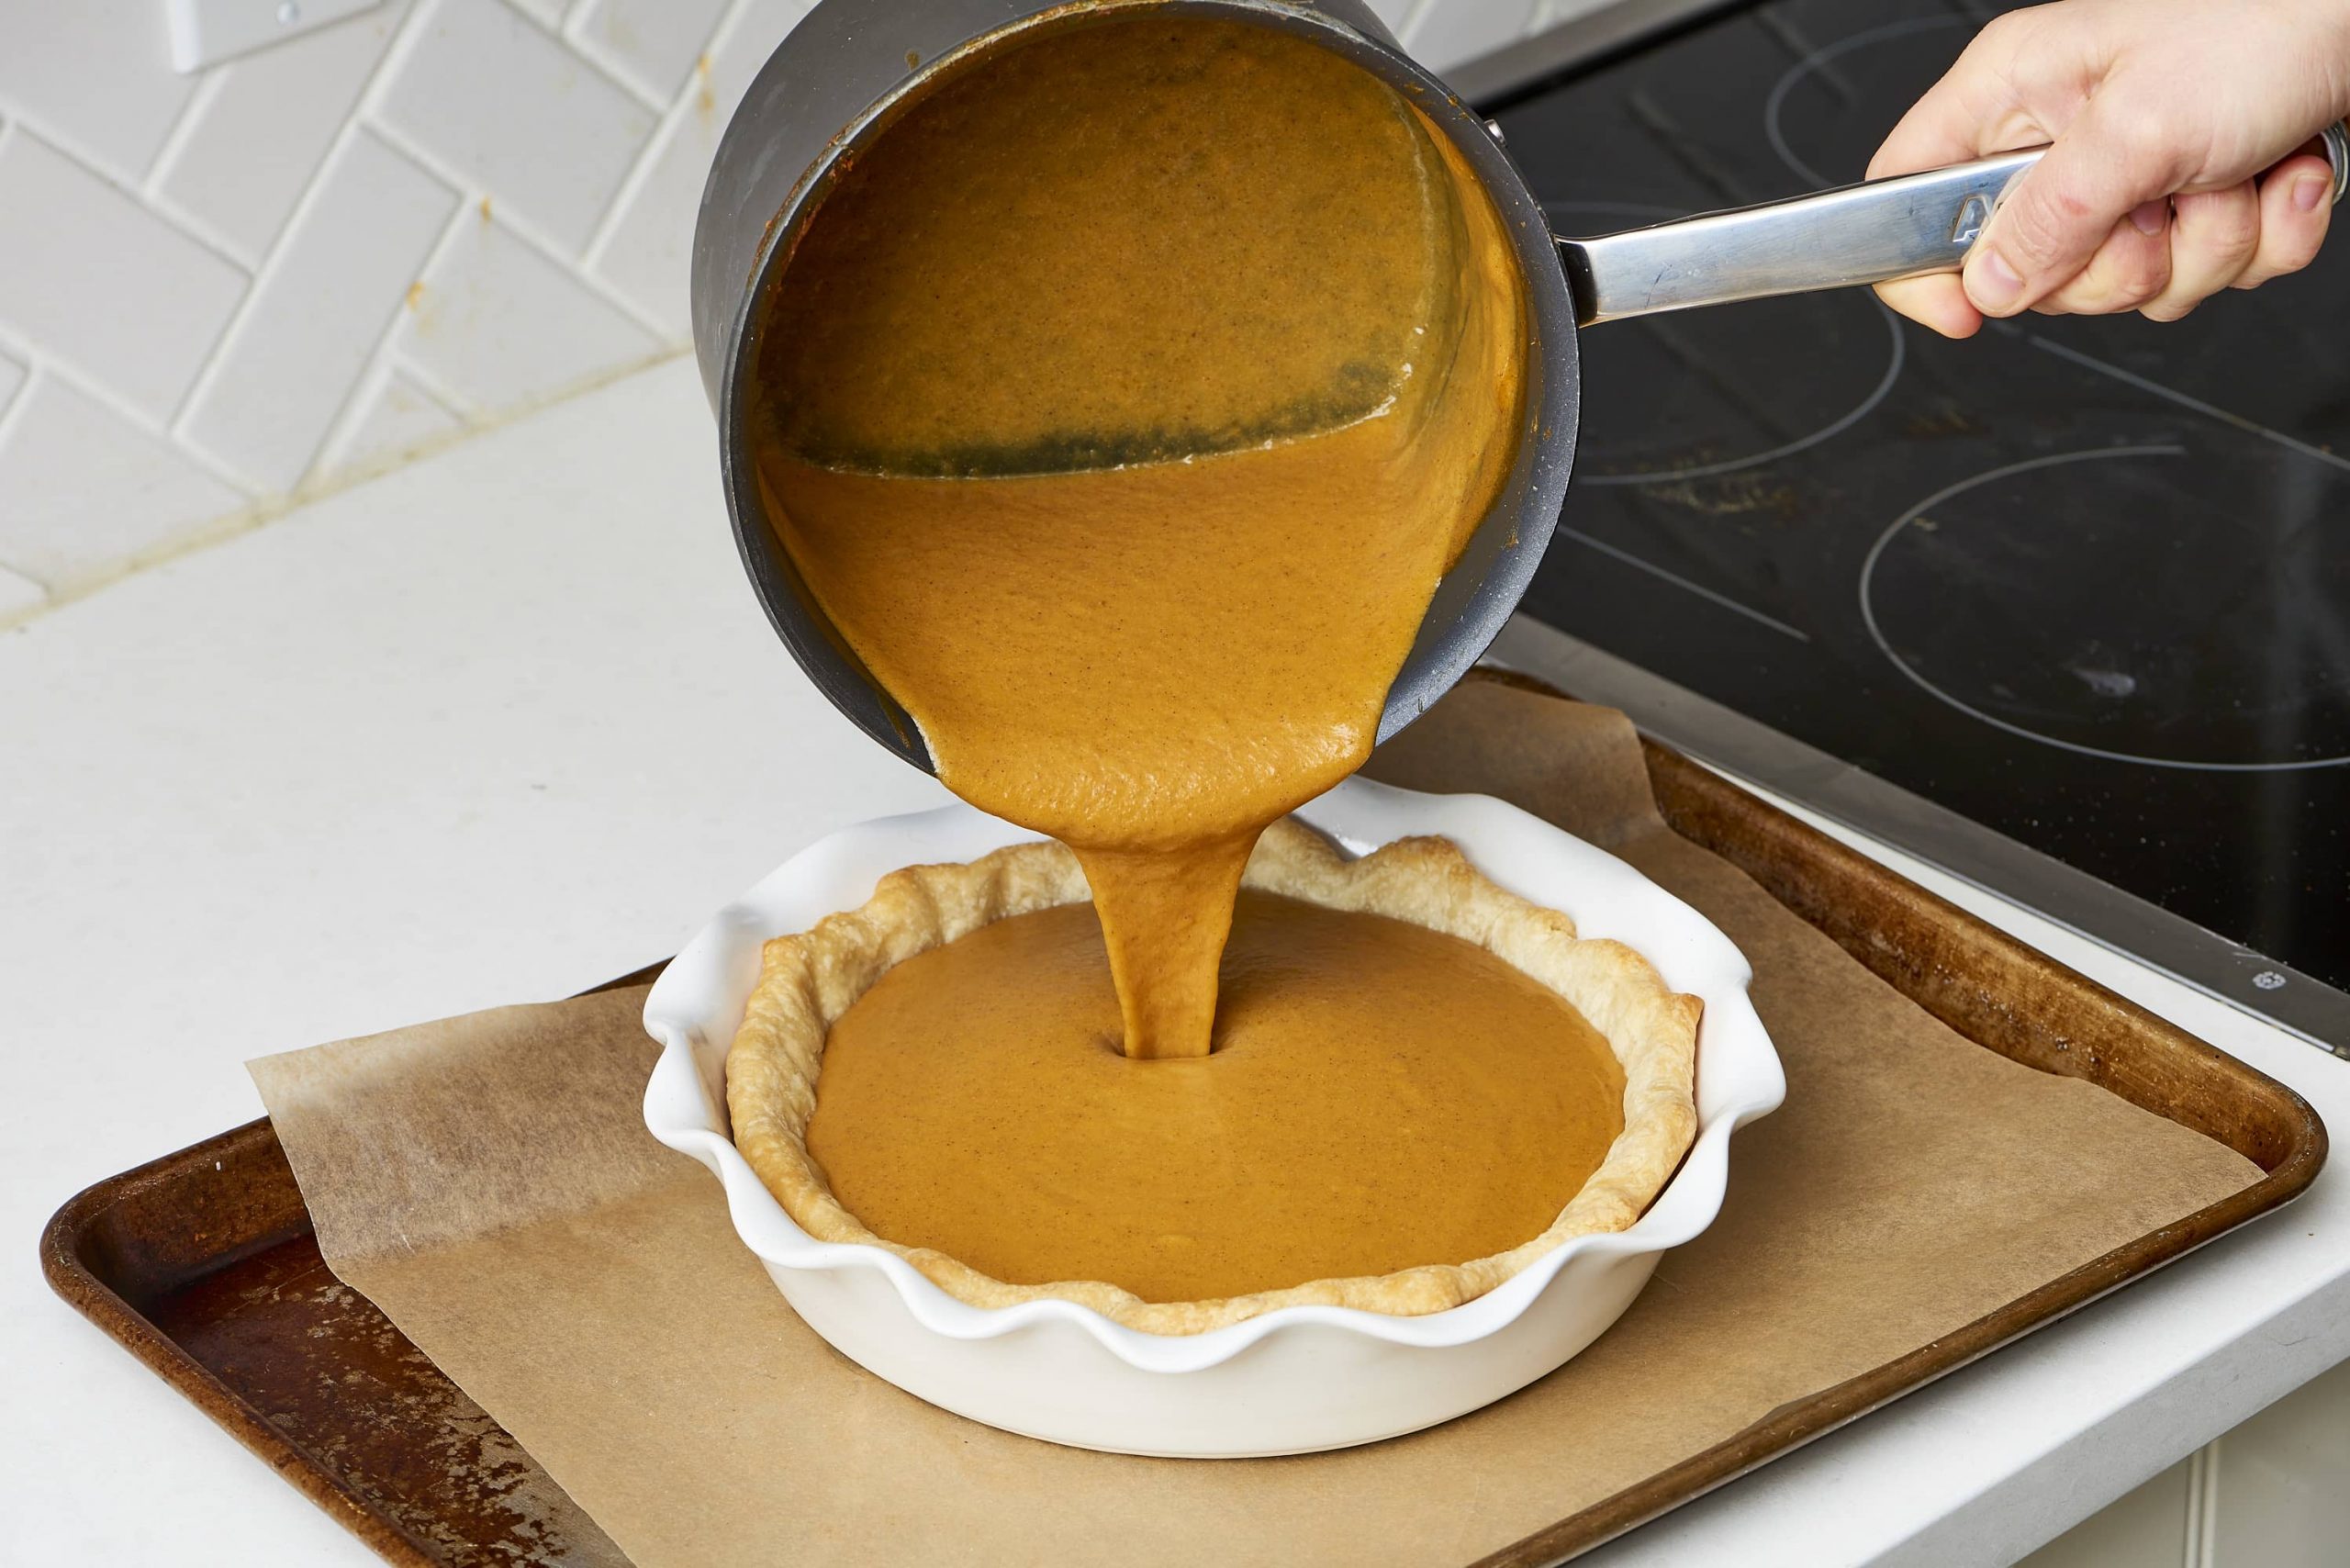 How to Make Homemade Pumpkin Pie from Scratch